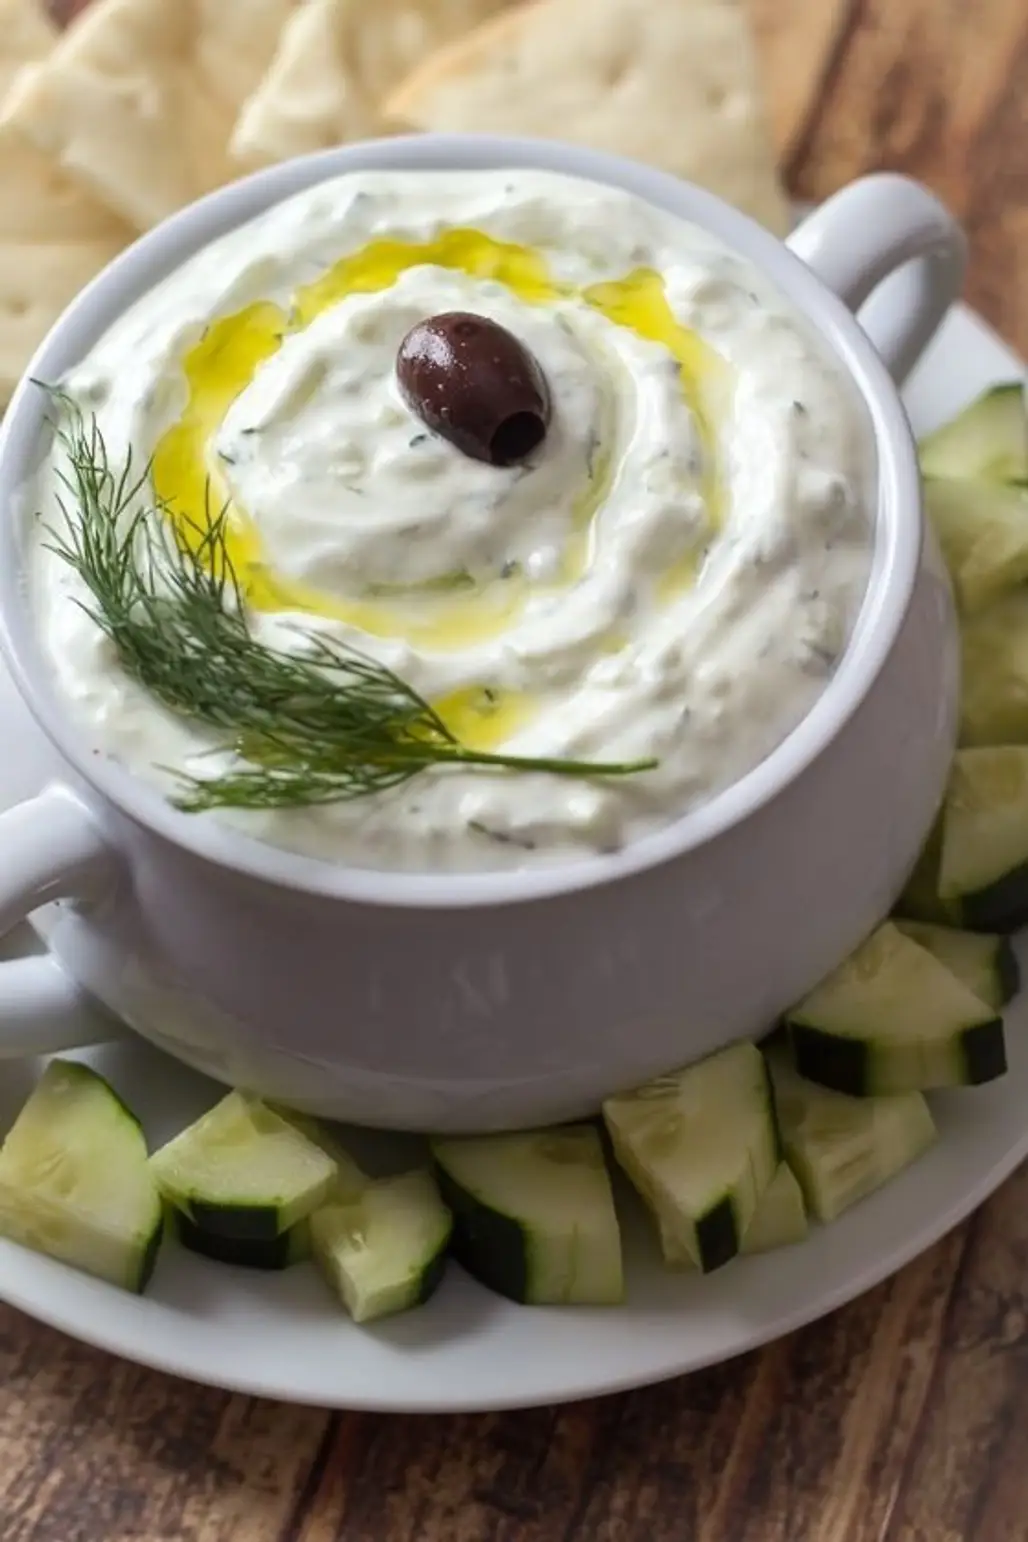 Authentic Tzatziki – a Yummy Dip of Greek Yogurt and Cucumber